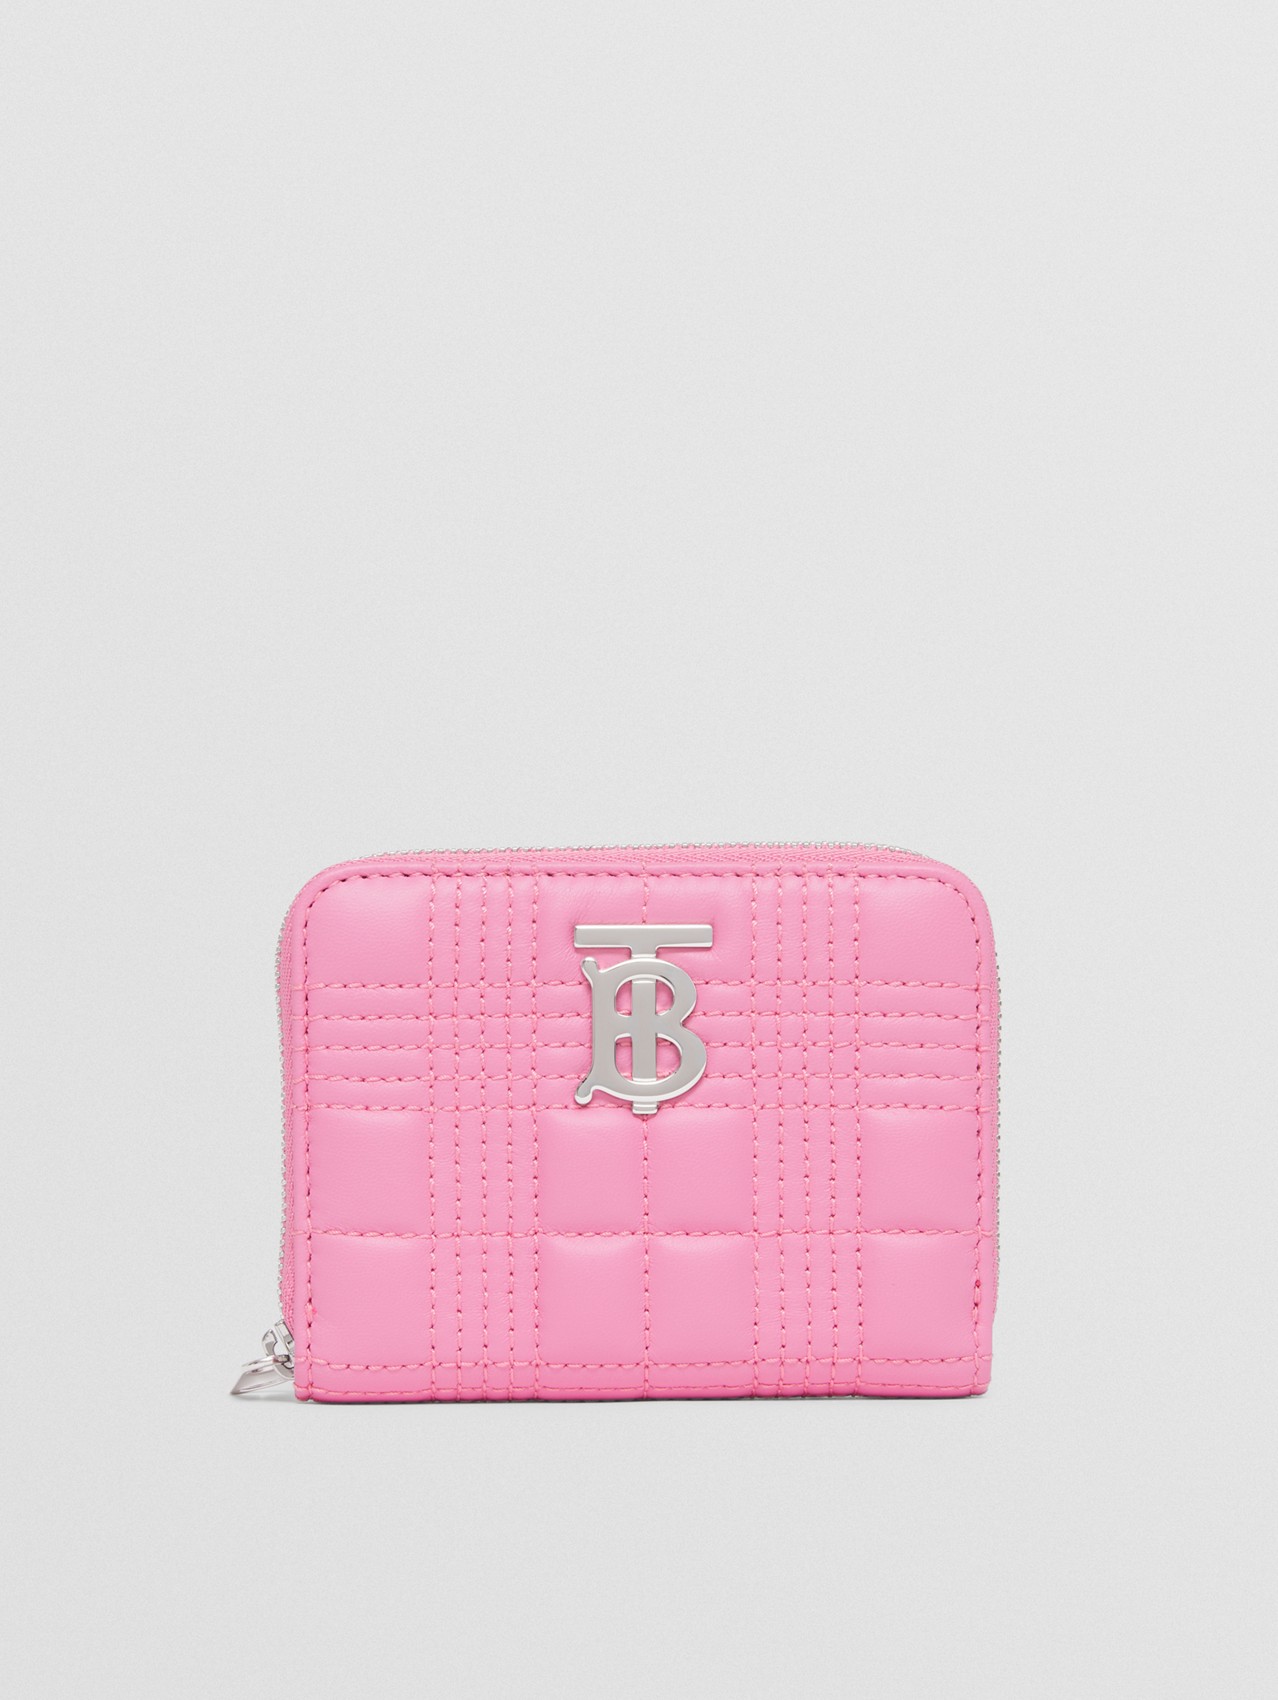 Quilted Lambskin Lola Zip Wallet in Primrose Pink